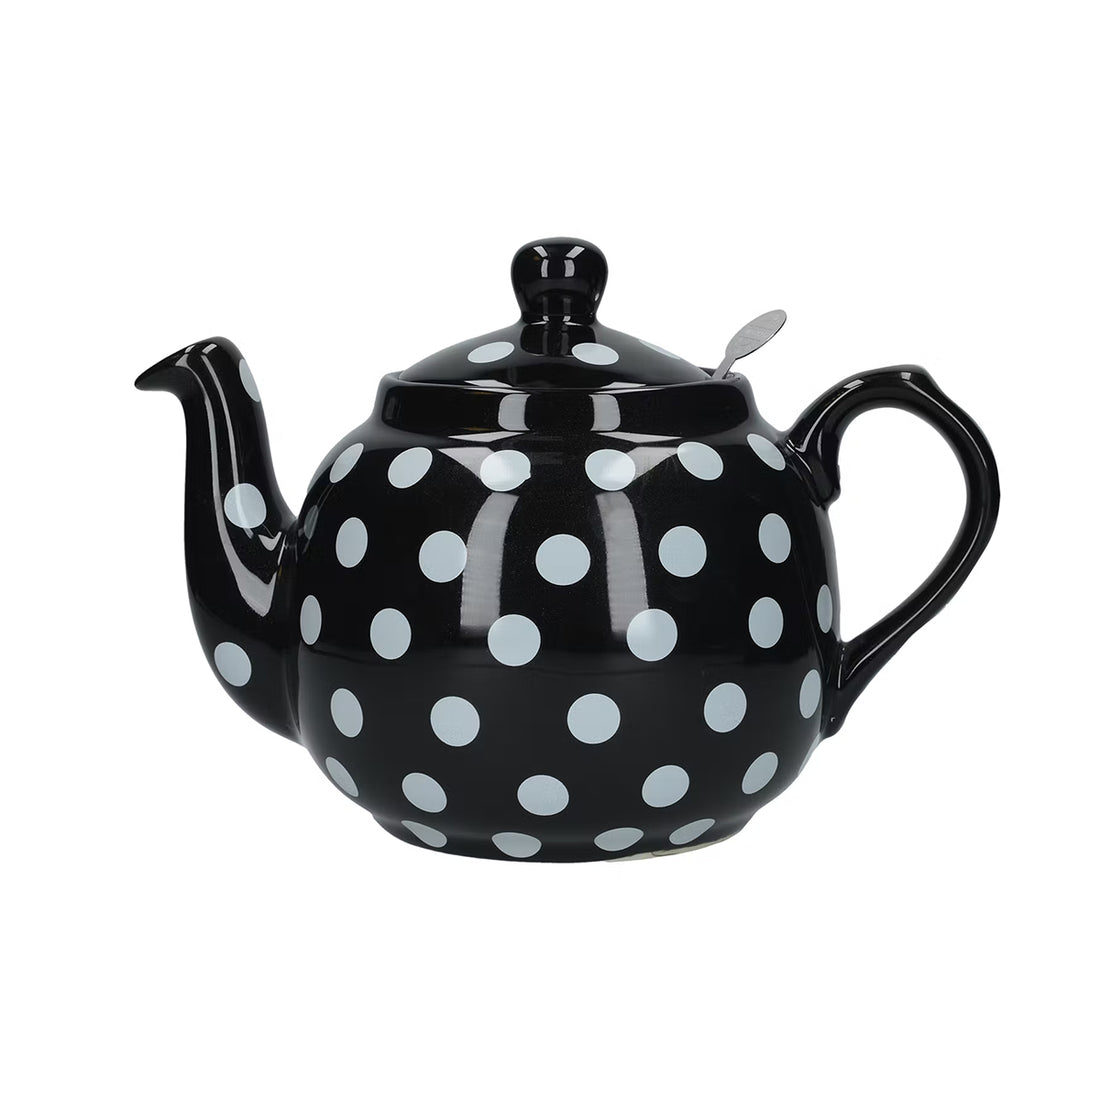 London Pottery, London Pottery Farmhouse 4 Cup Teapot - Black with White Spots, Redber Coffee